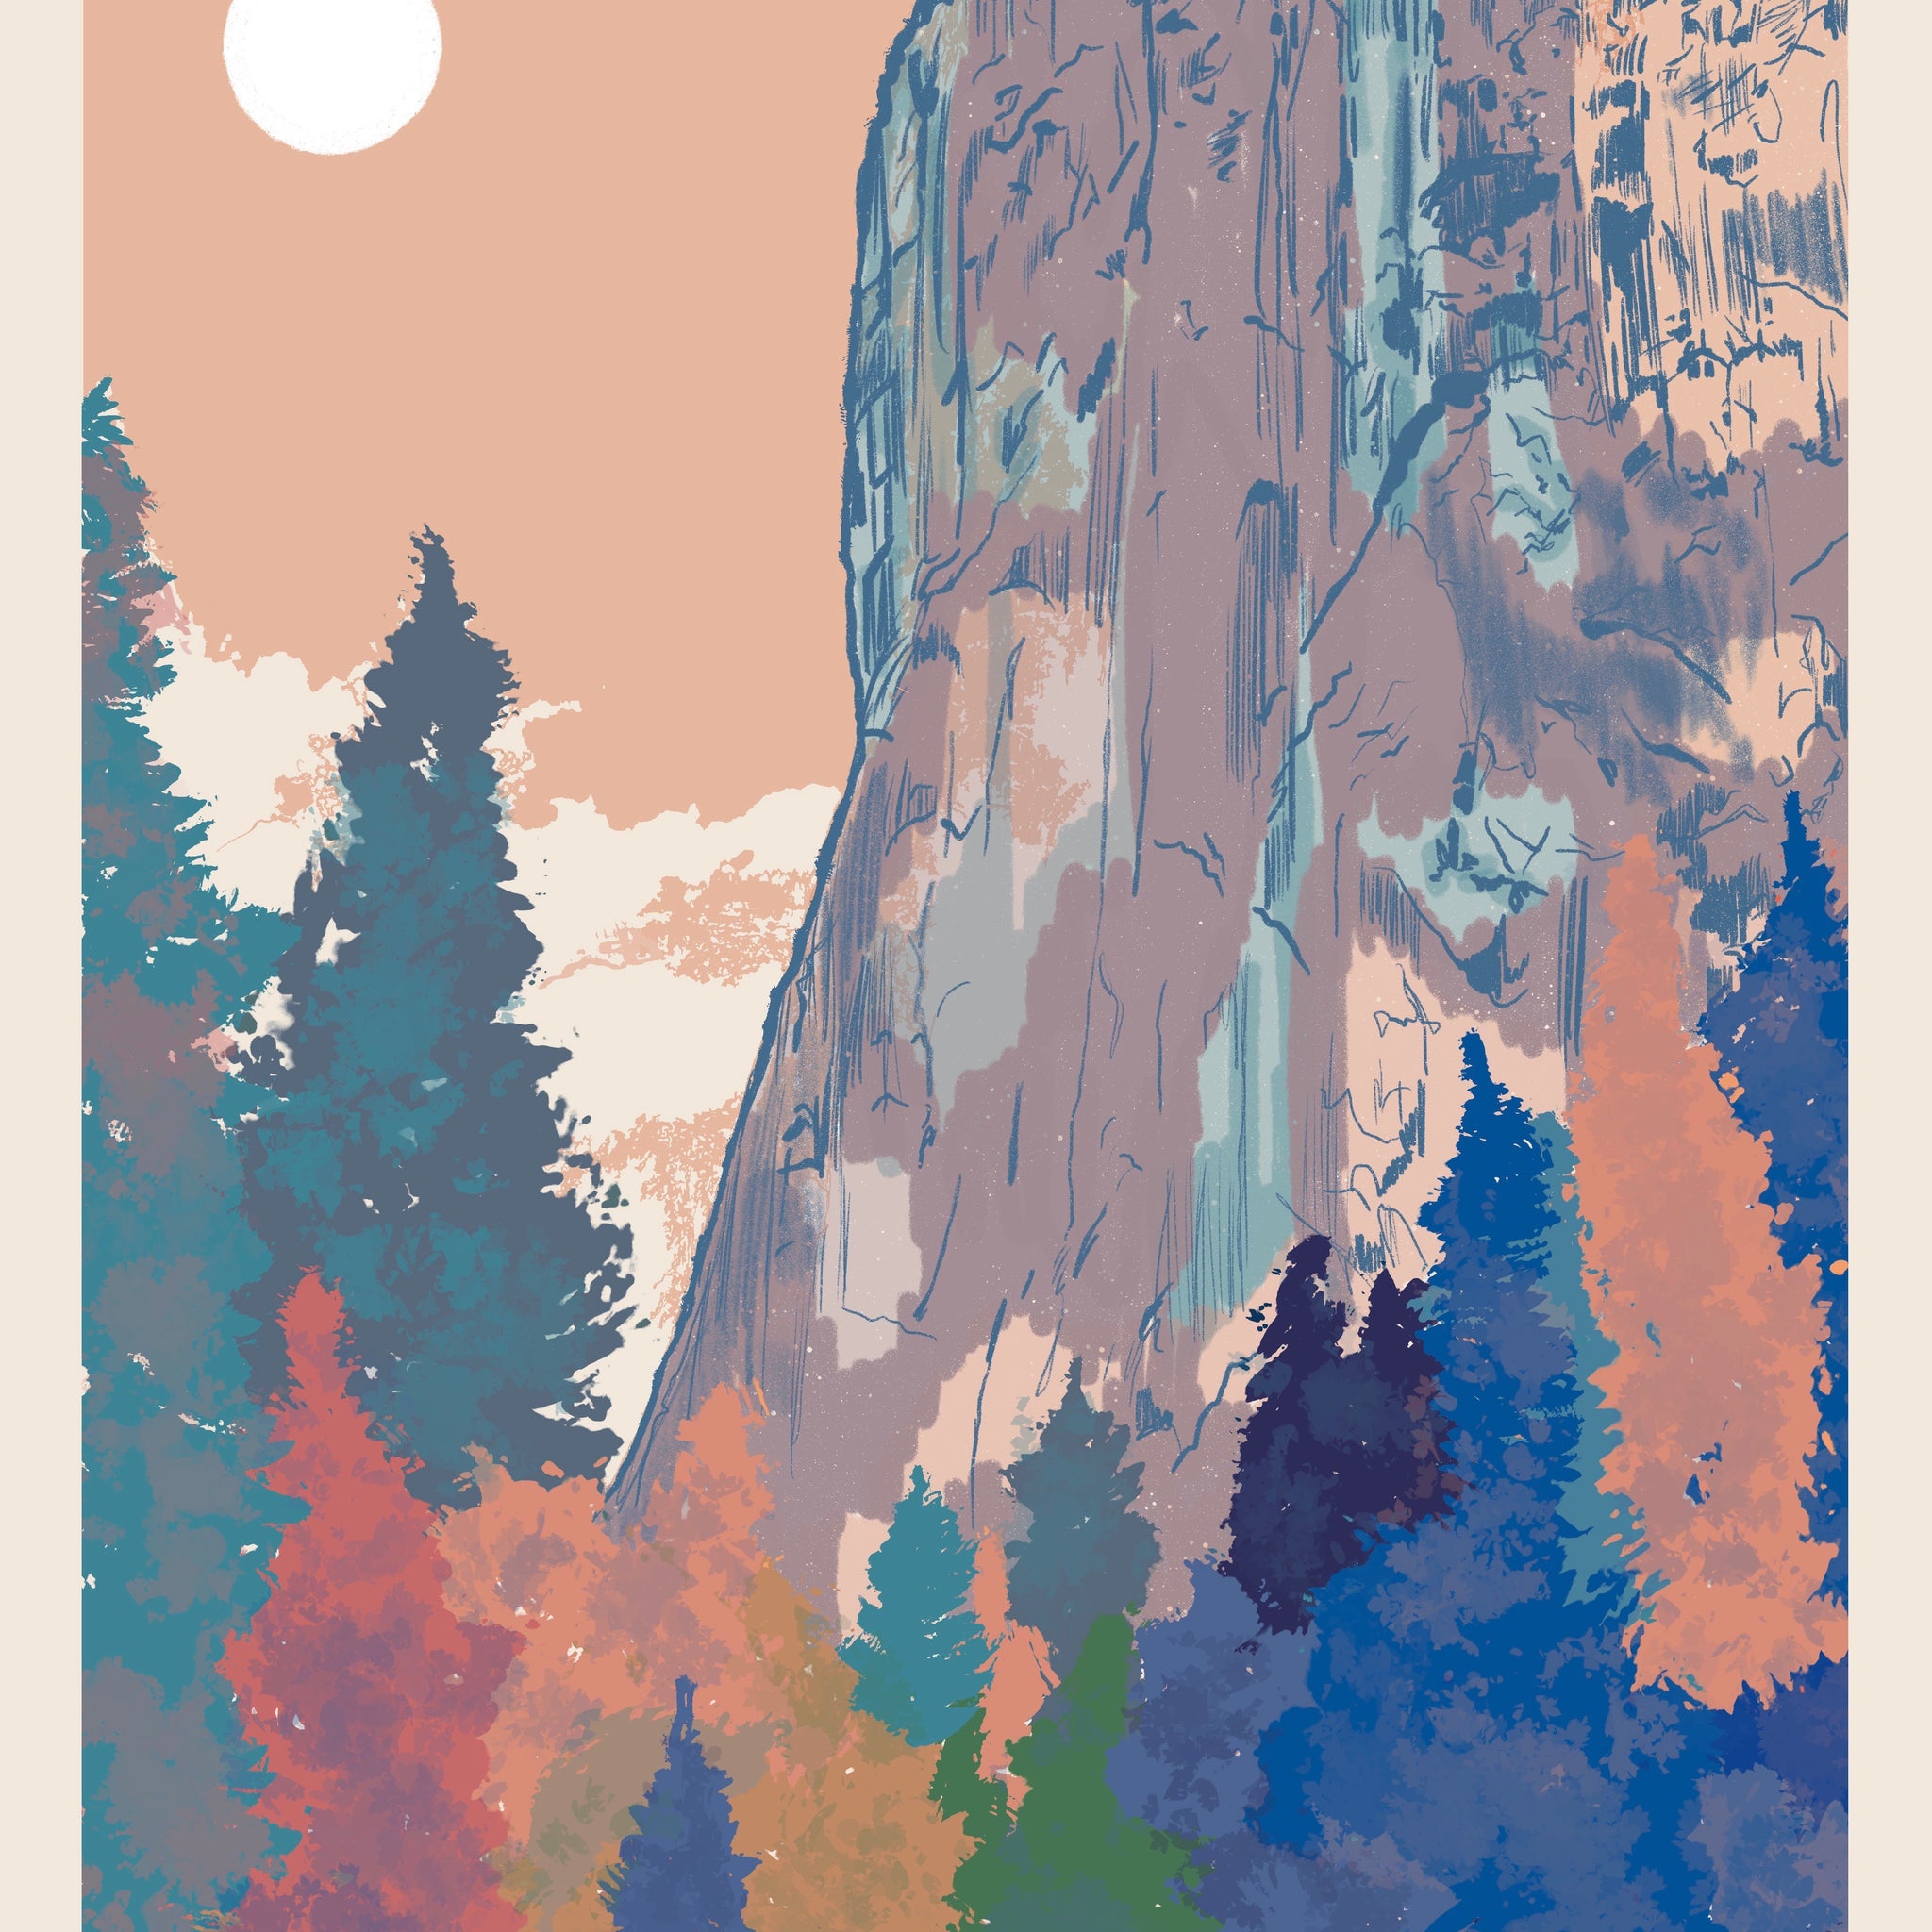 El Capitan (Yosemite) unframed